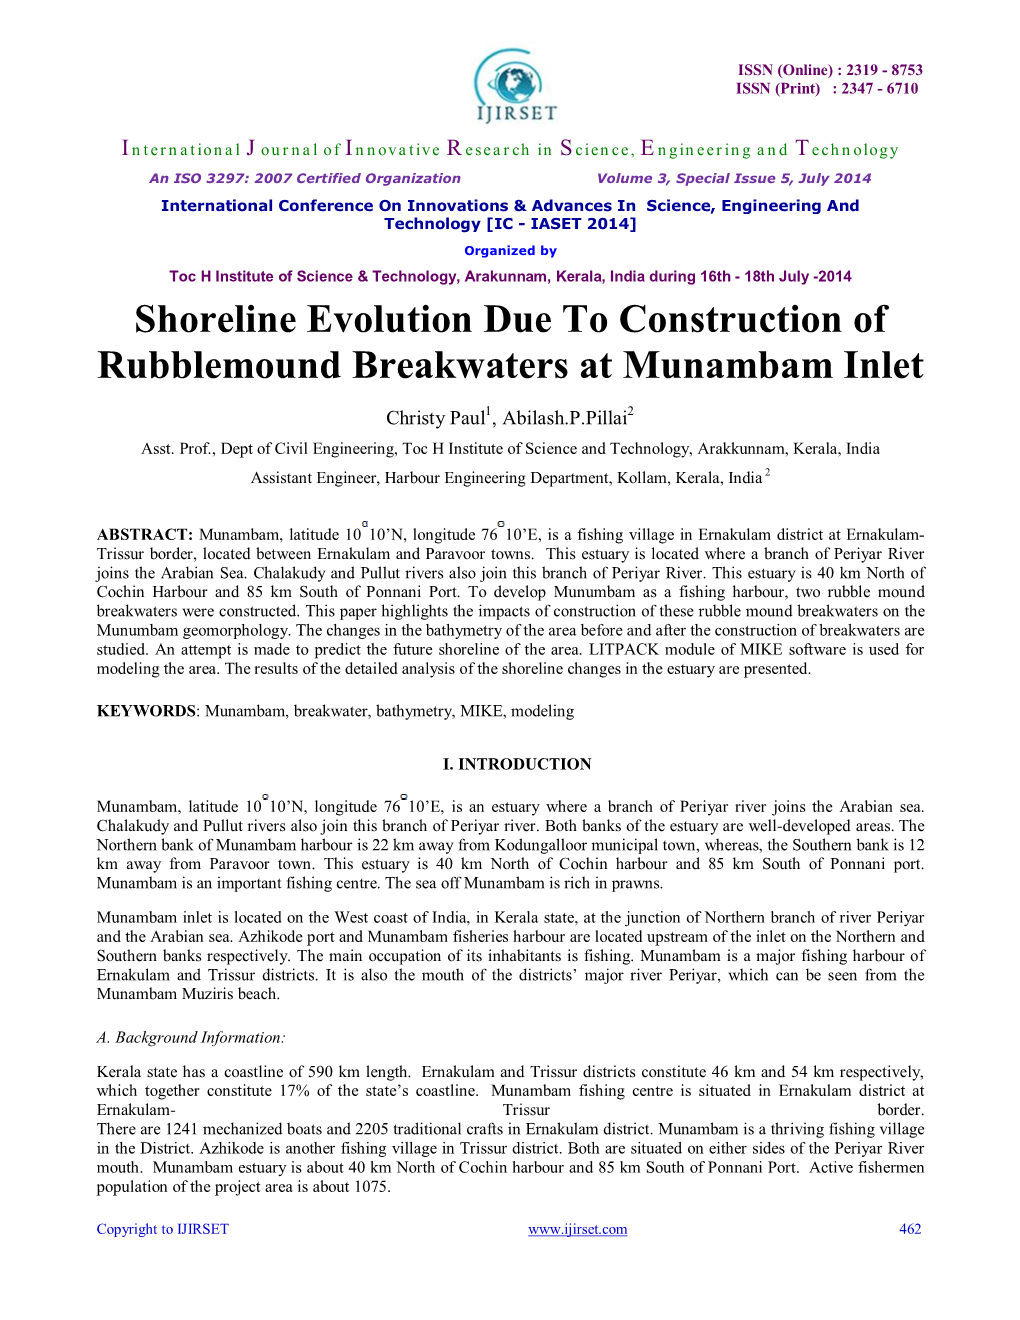 Shoreline Evolution Due to Construction of Rubblemound Breakwaters at Munambam Inlet